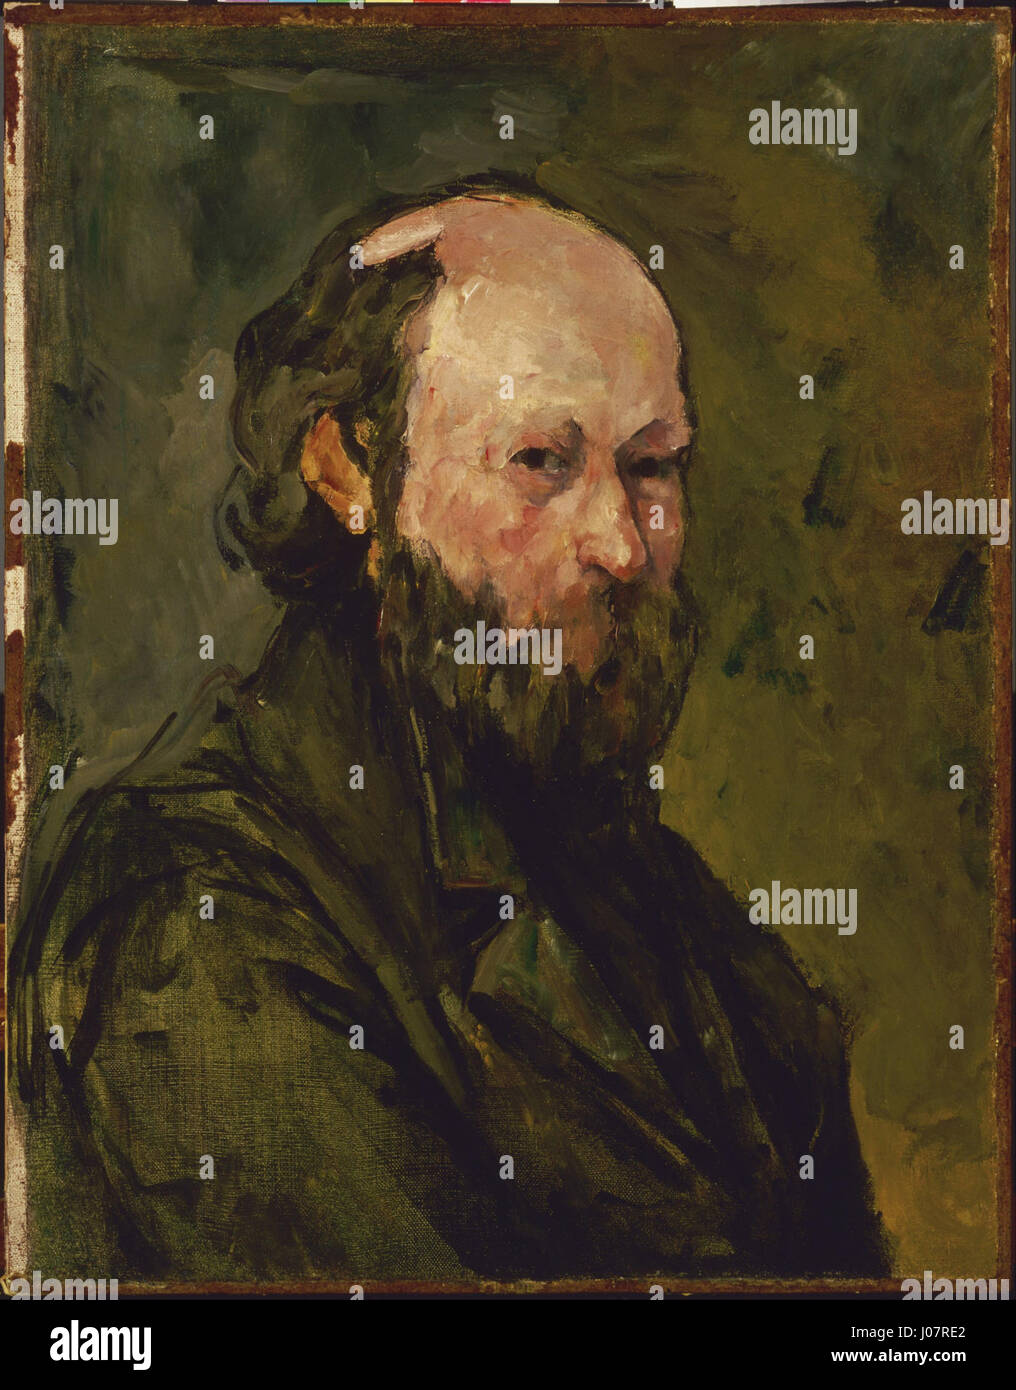 Paul Cézanne - Self-Portrait - Stock Photo